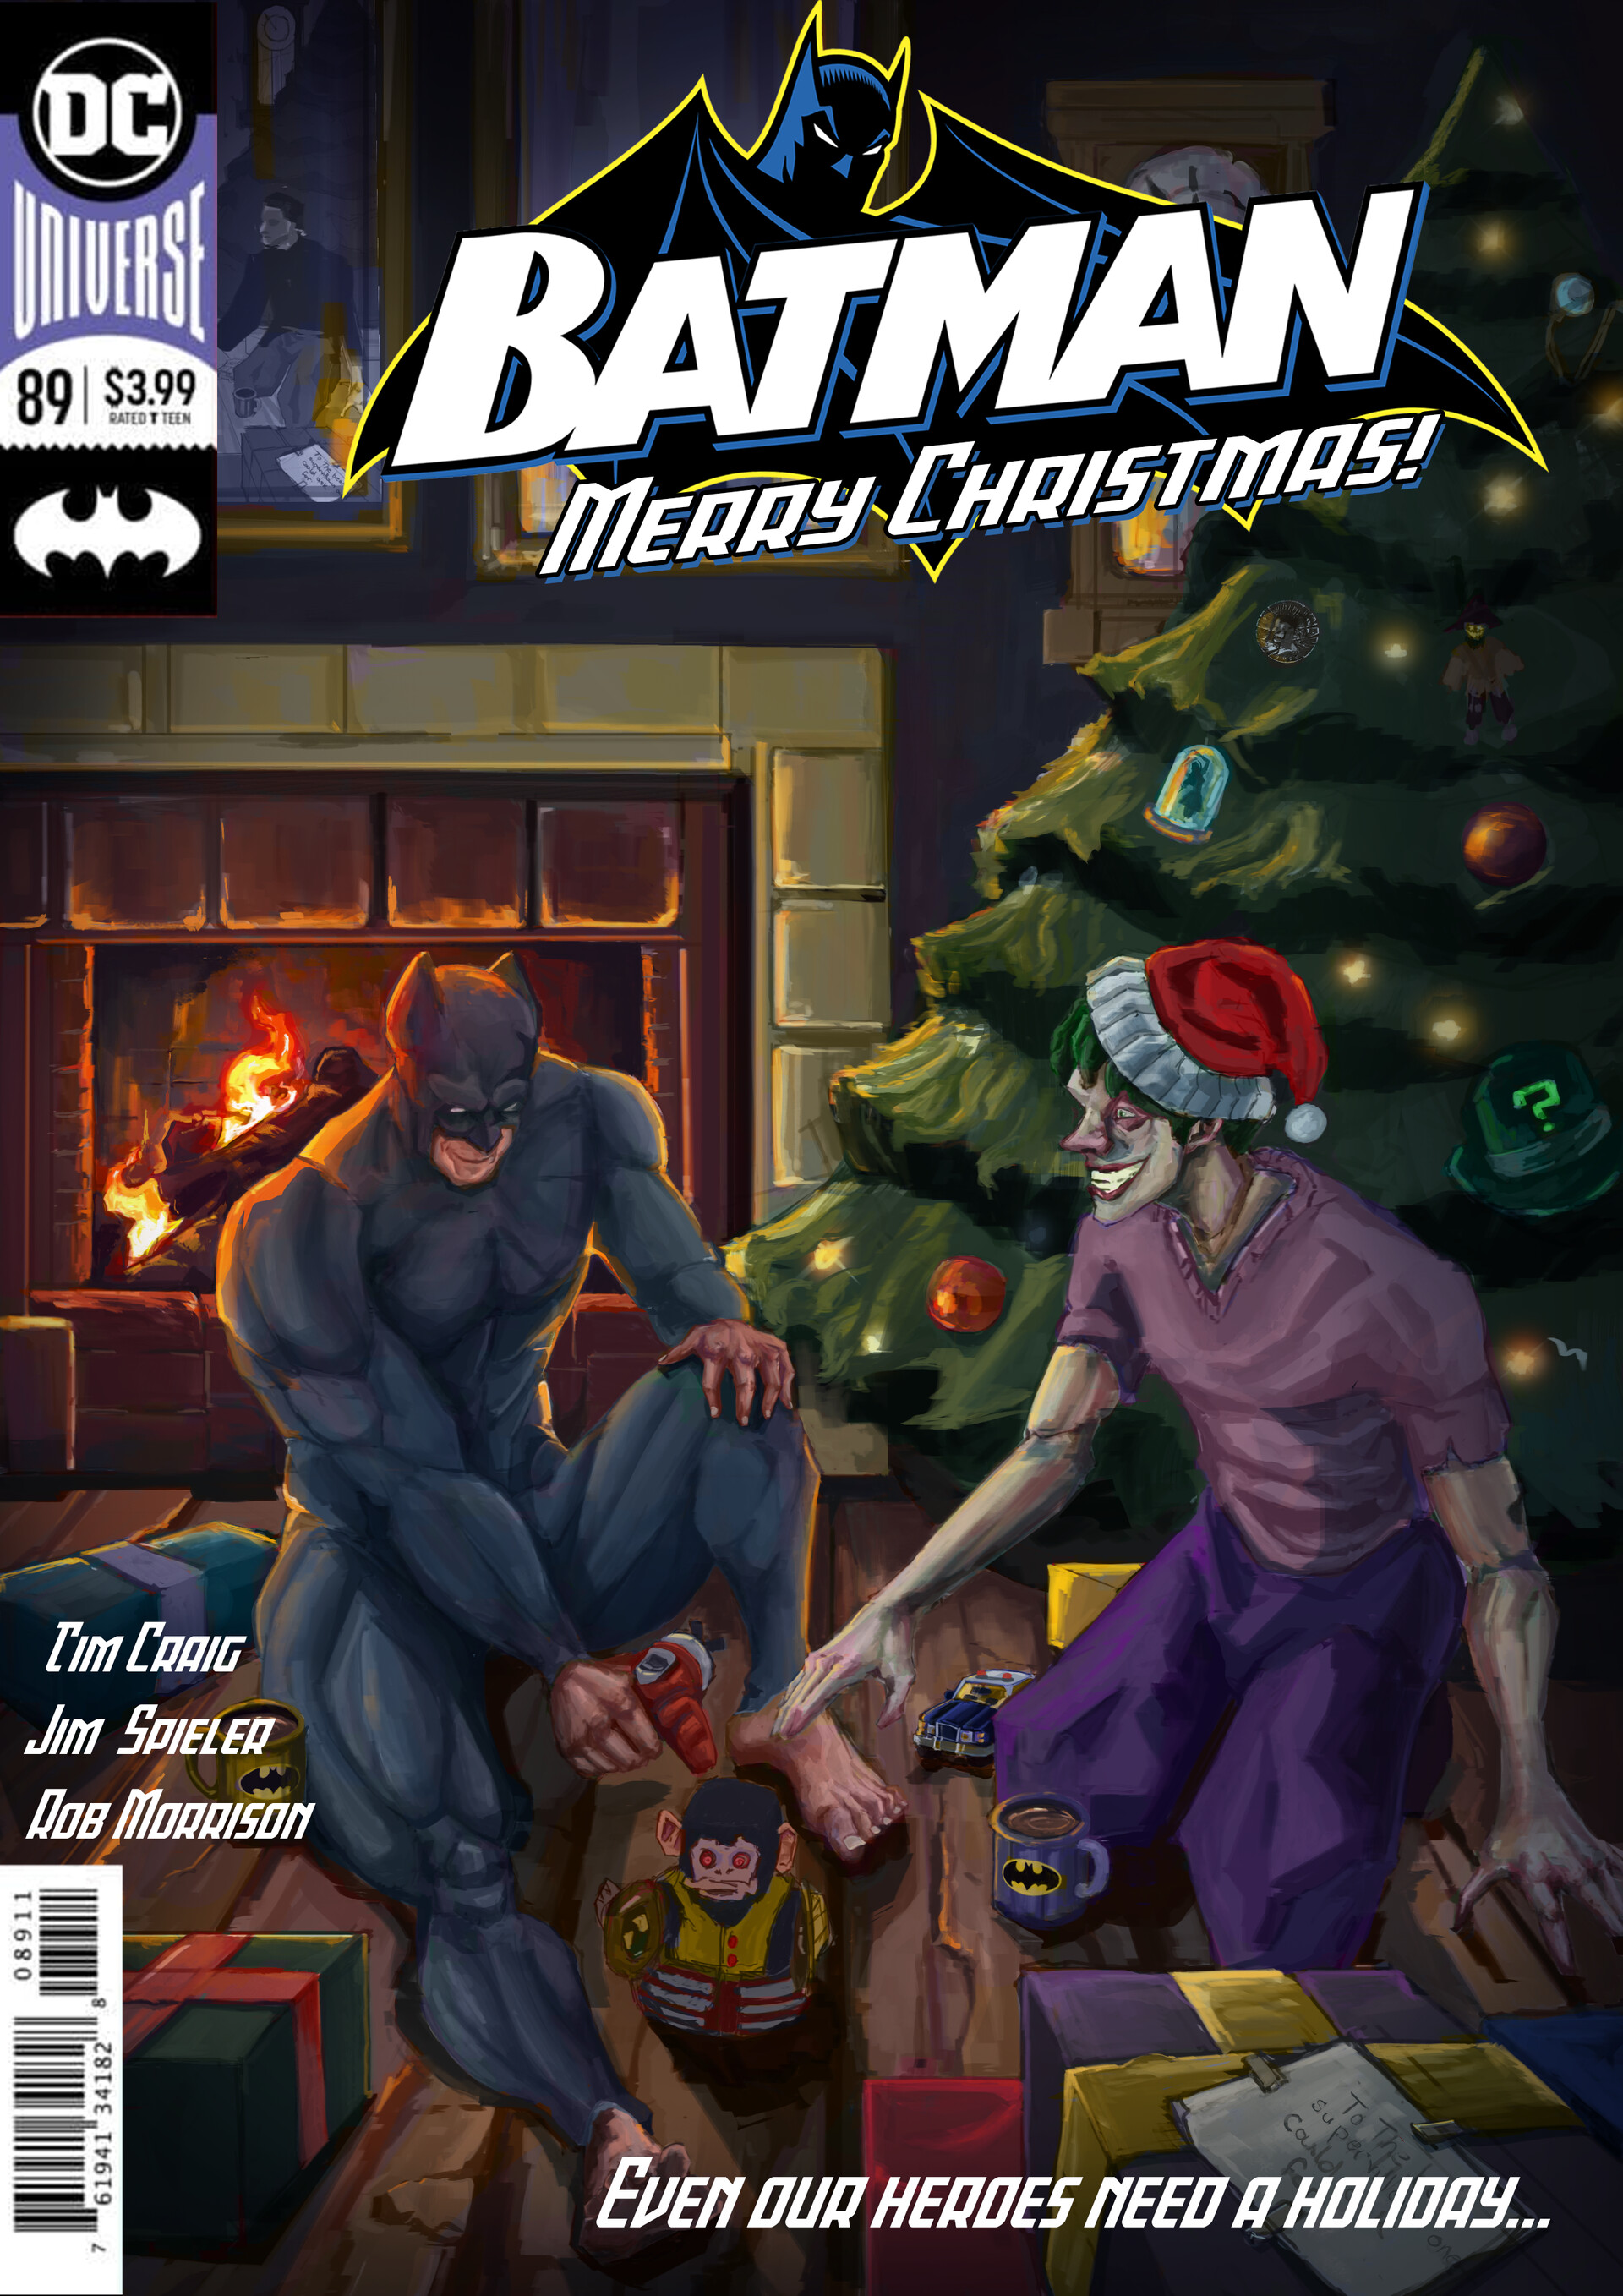 ArtStation - Batman Christmas Cover